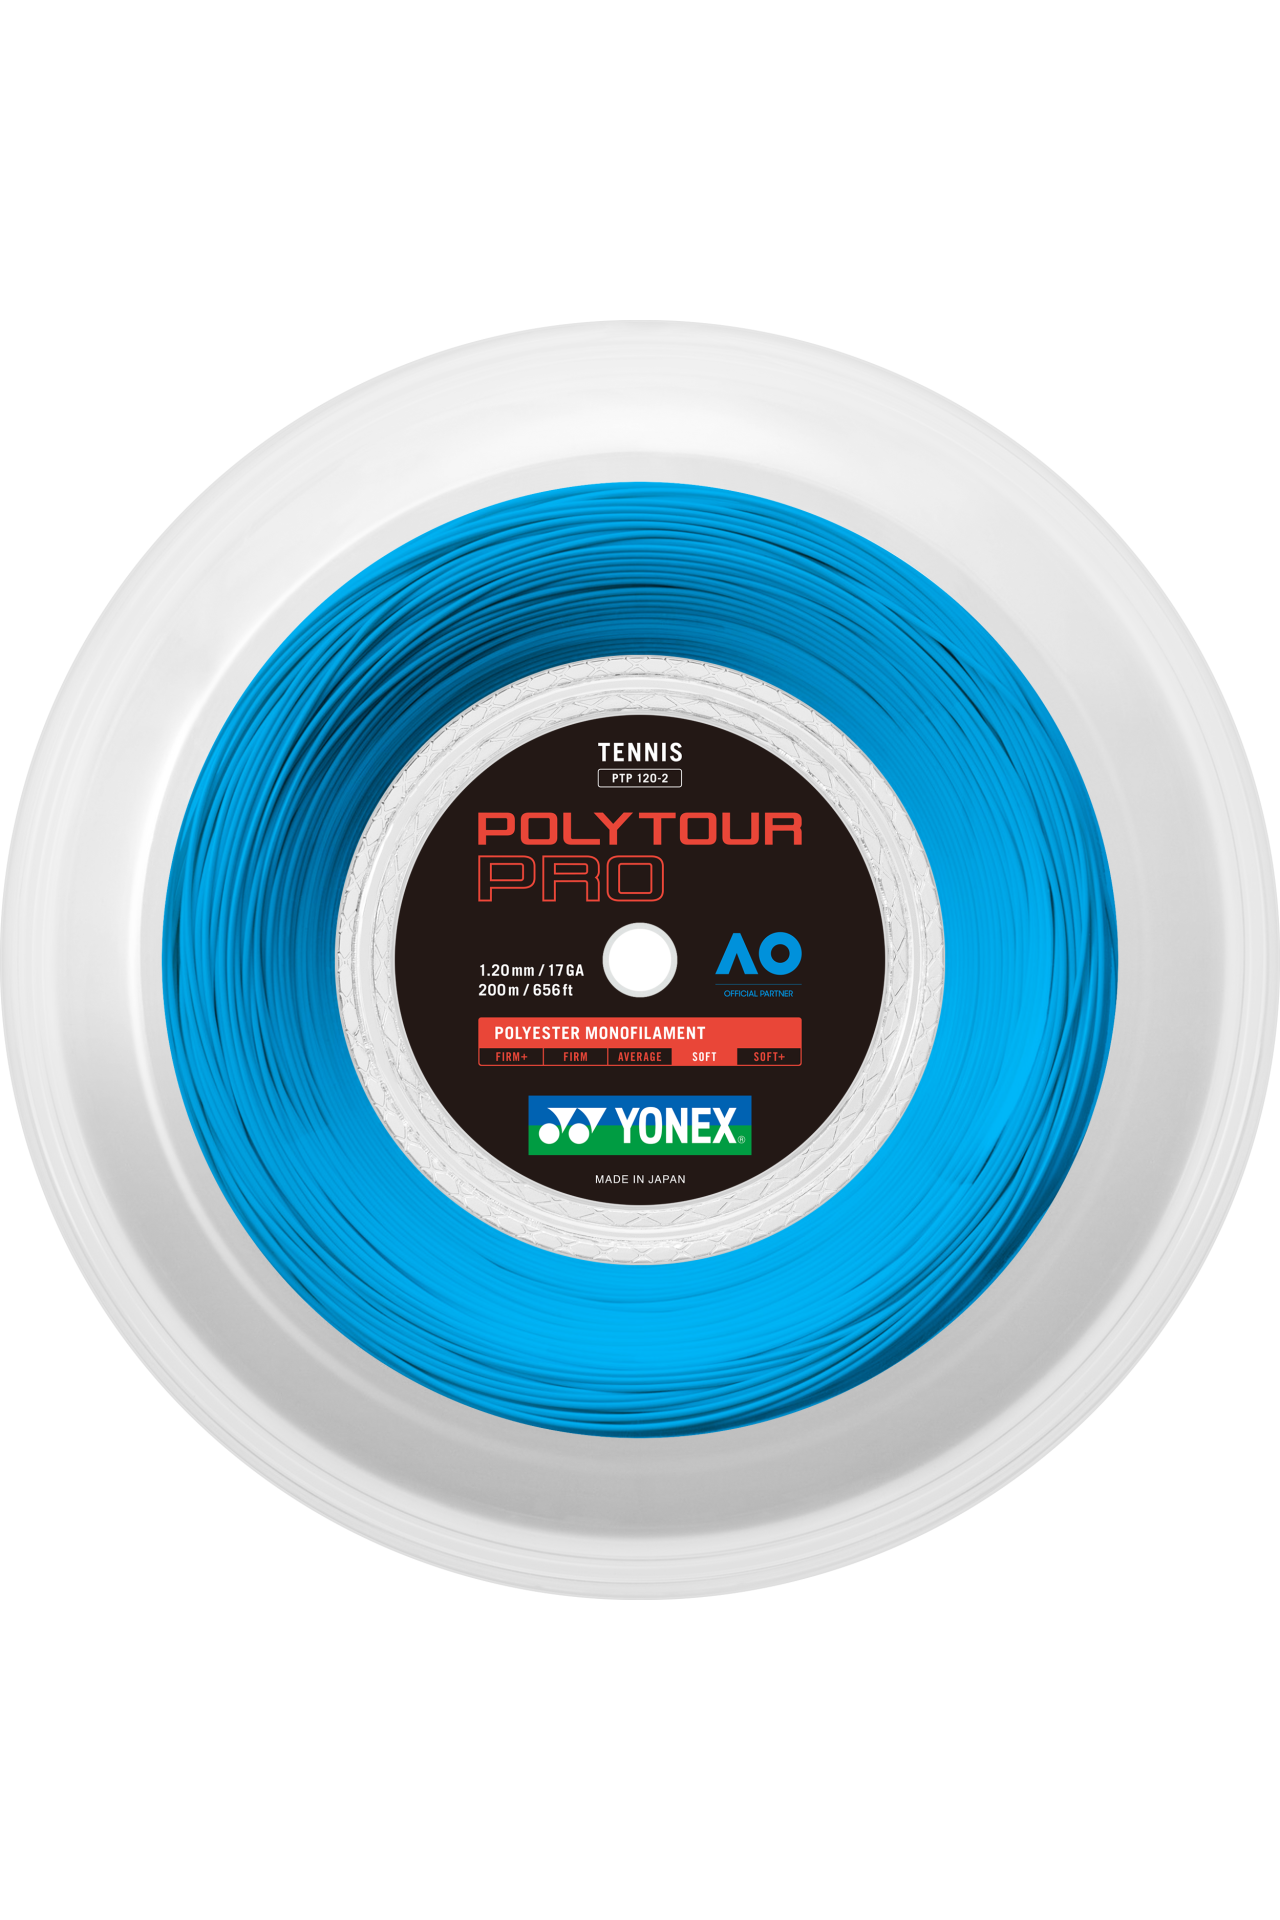 PolyTour Pro 120 Monofilament 200m Tenis Kordajı - Mavi | Yonex